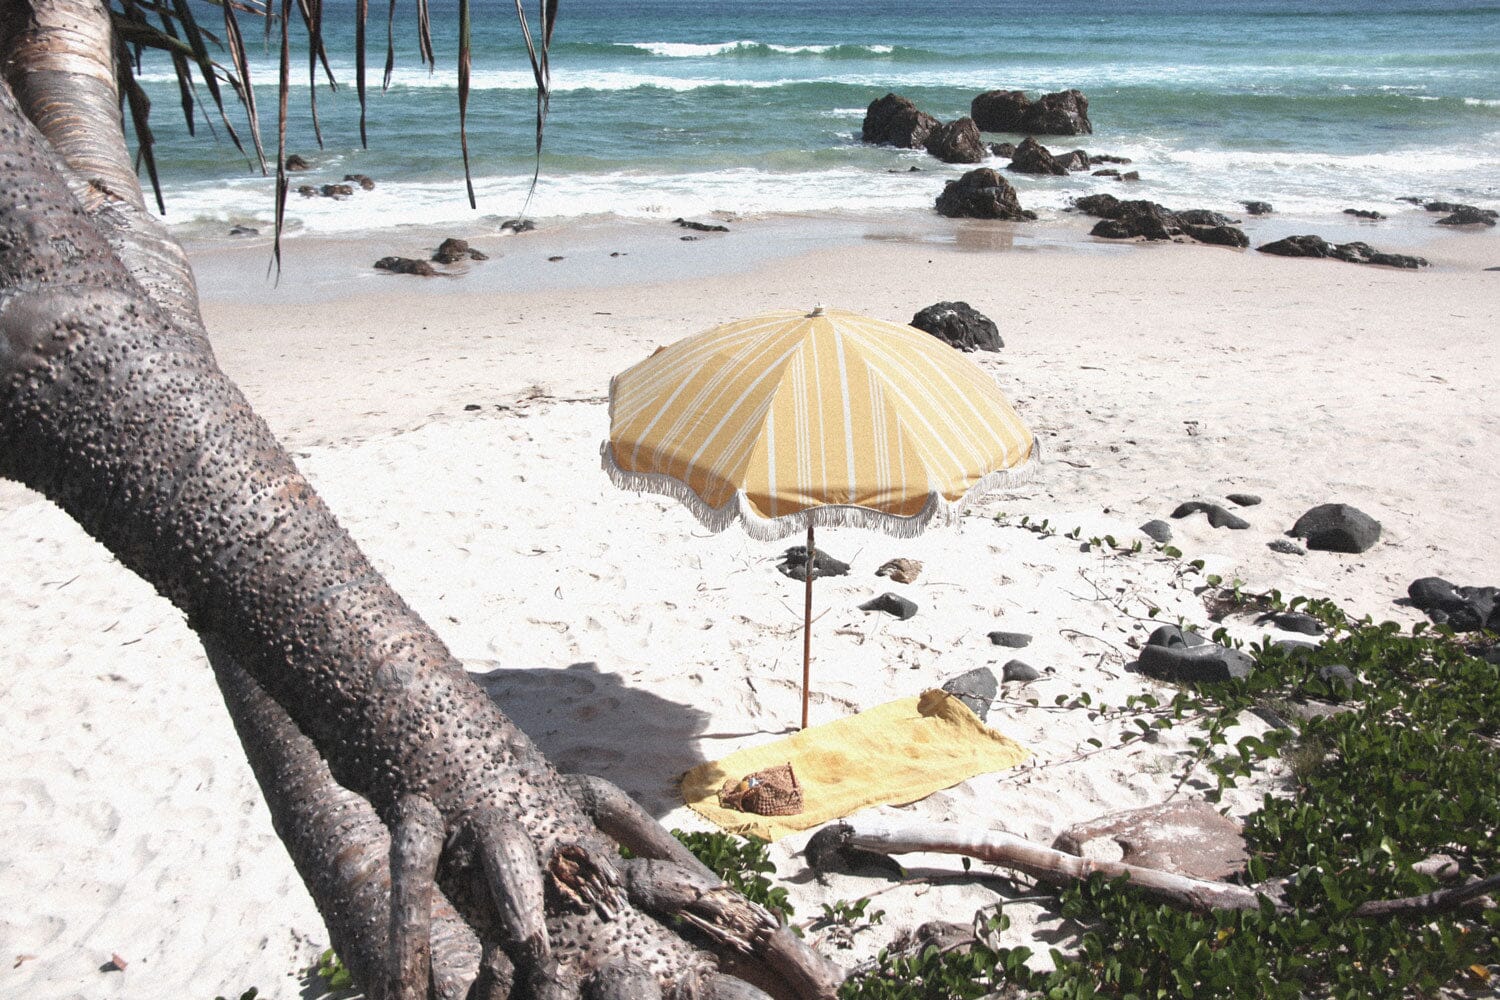 The Premium Beach Umbrella - Vintage Yellow Stripe